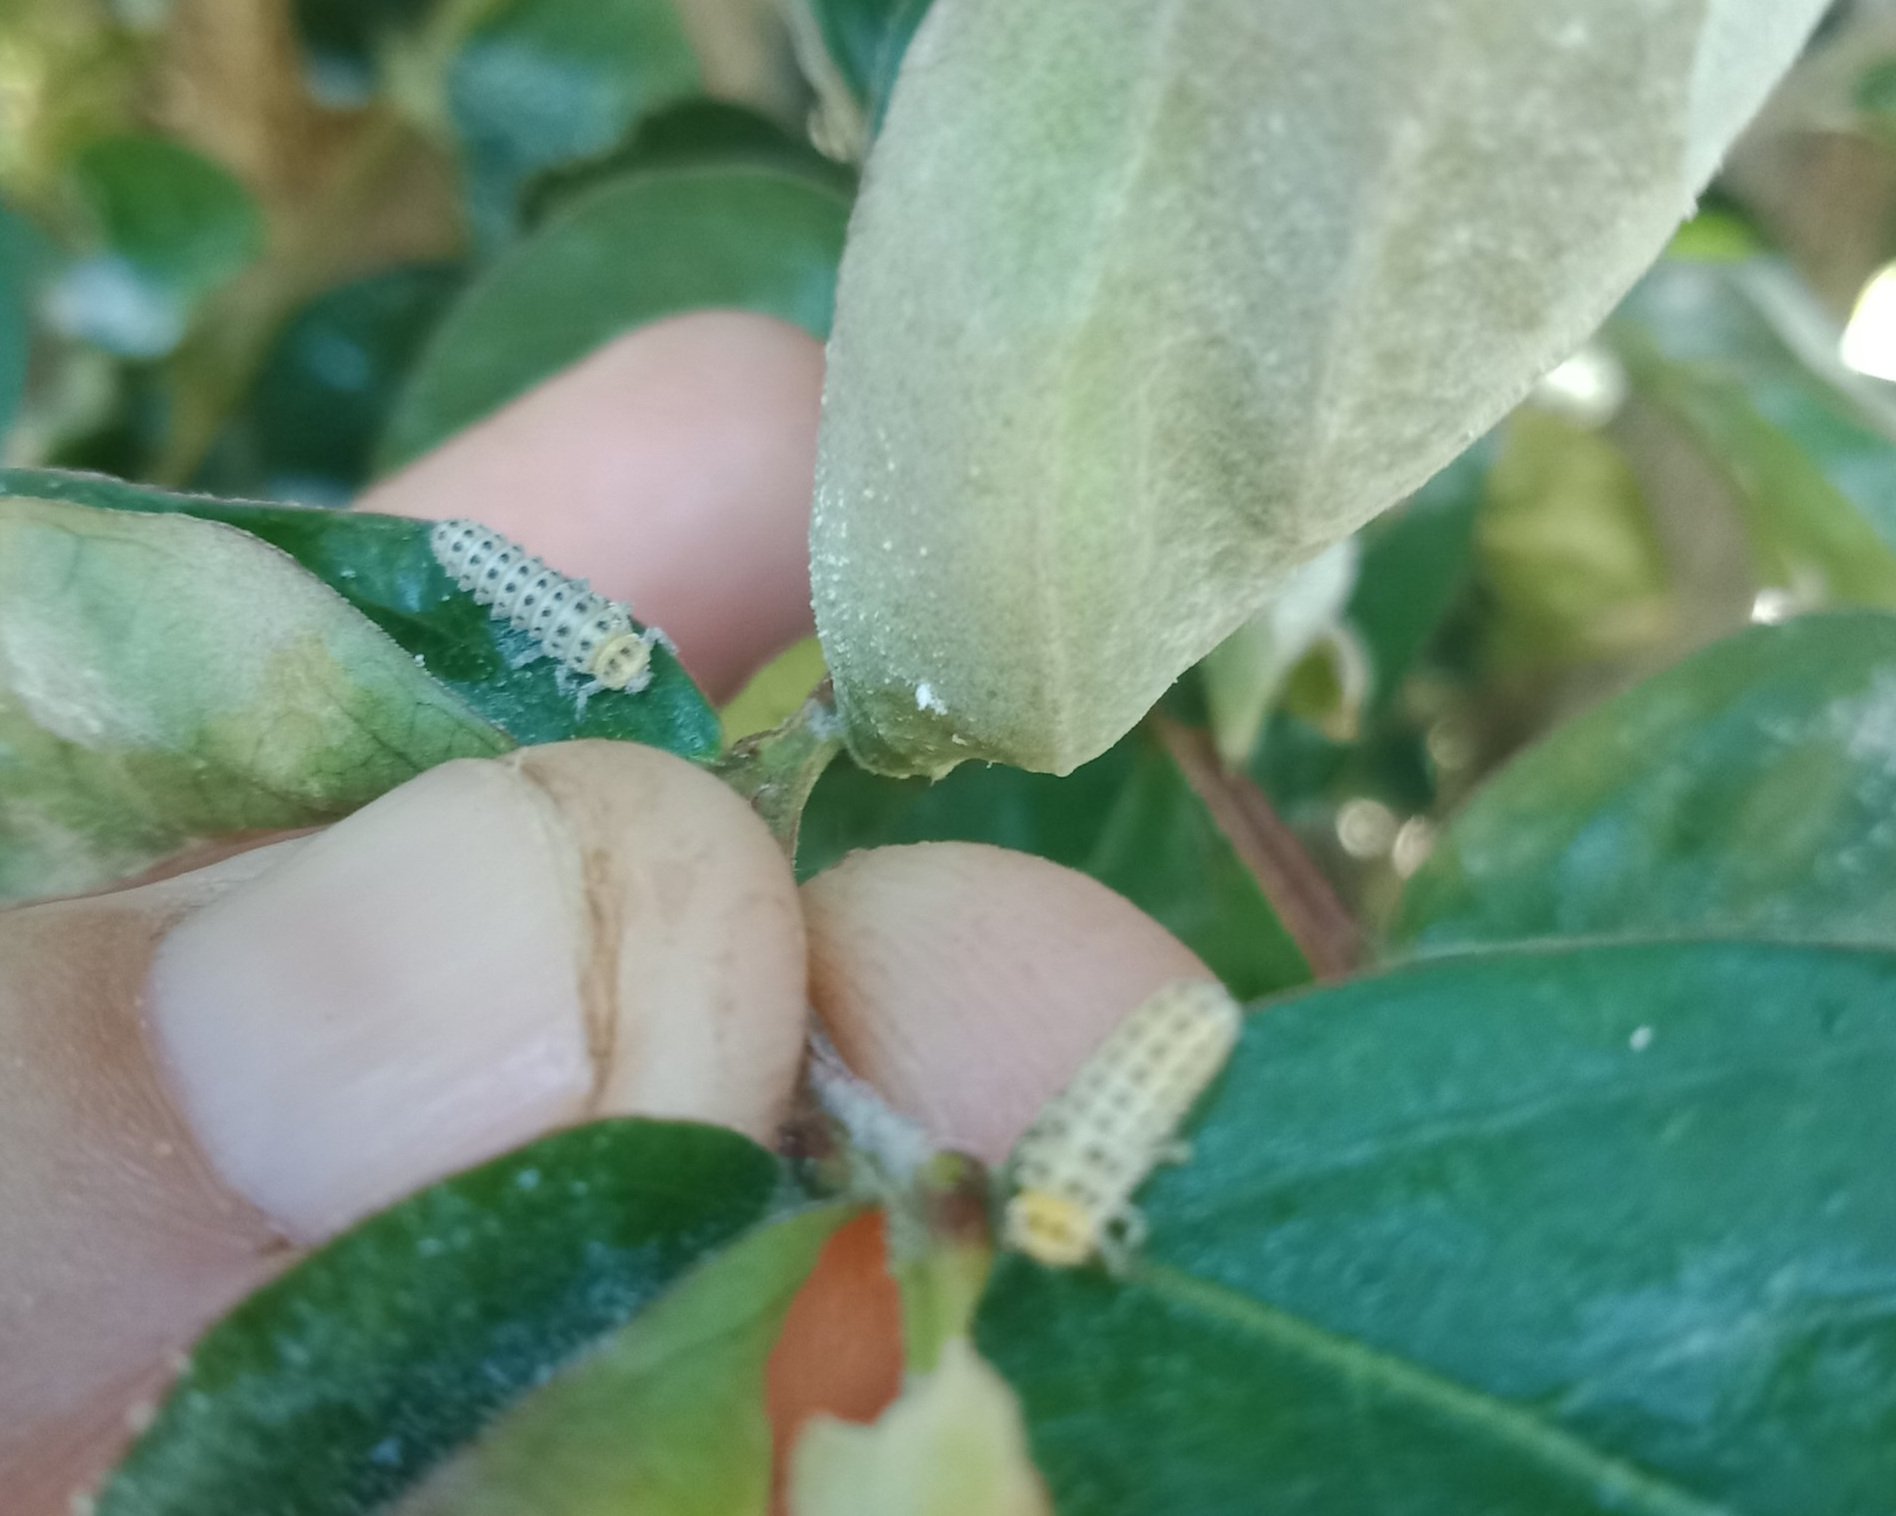  A Fungus-Eating Ladybug Larvae 